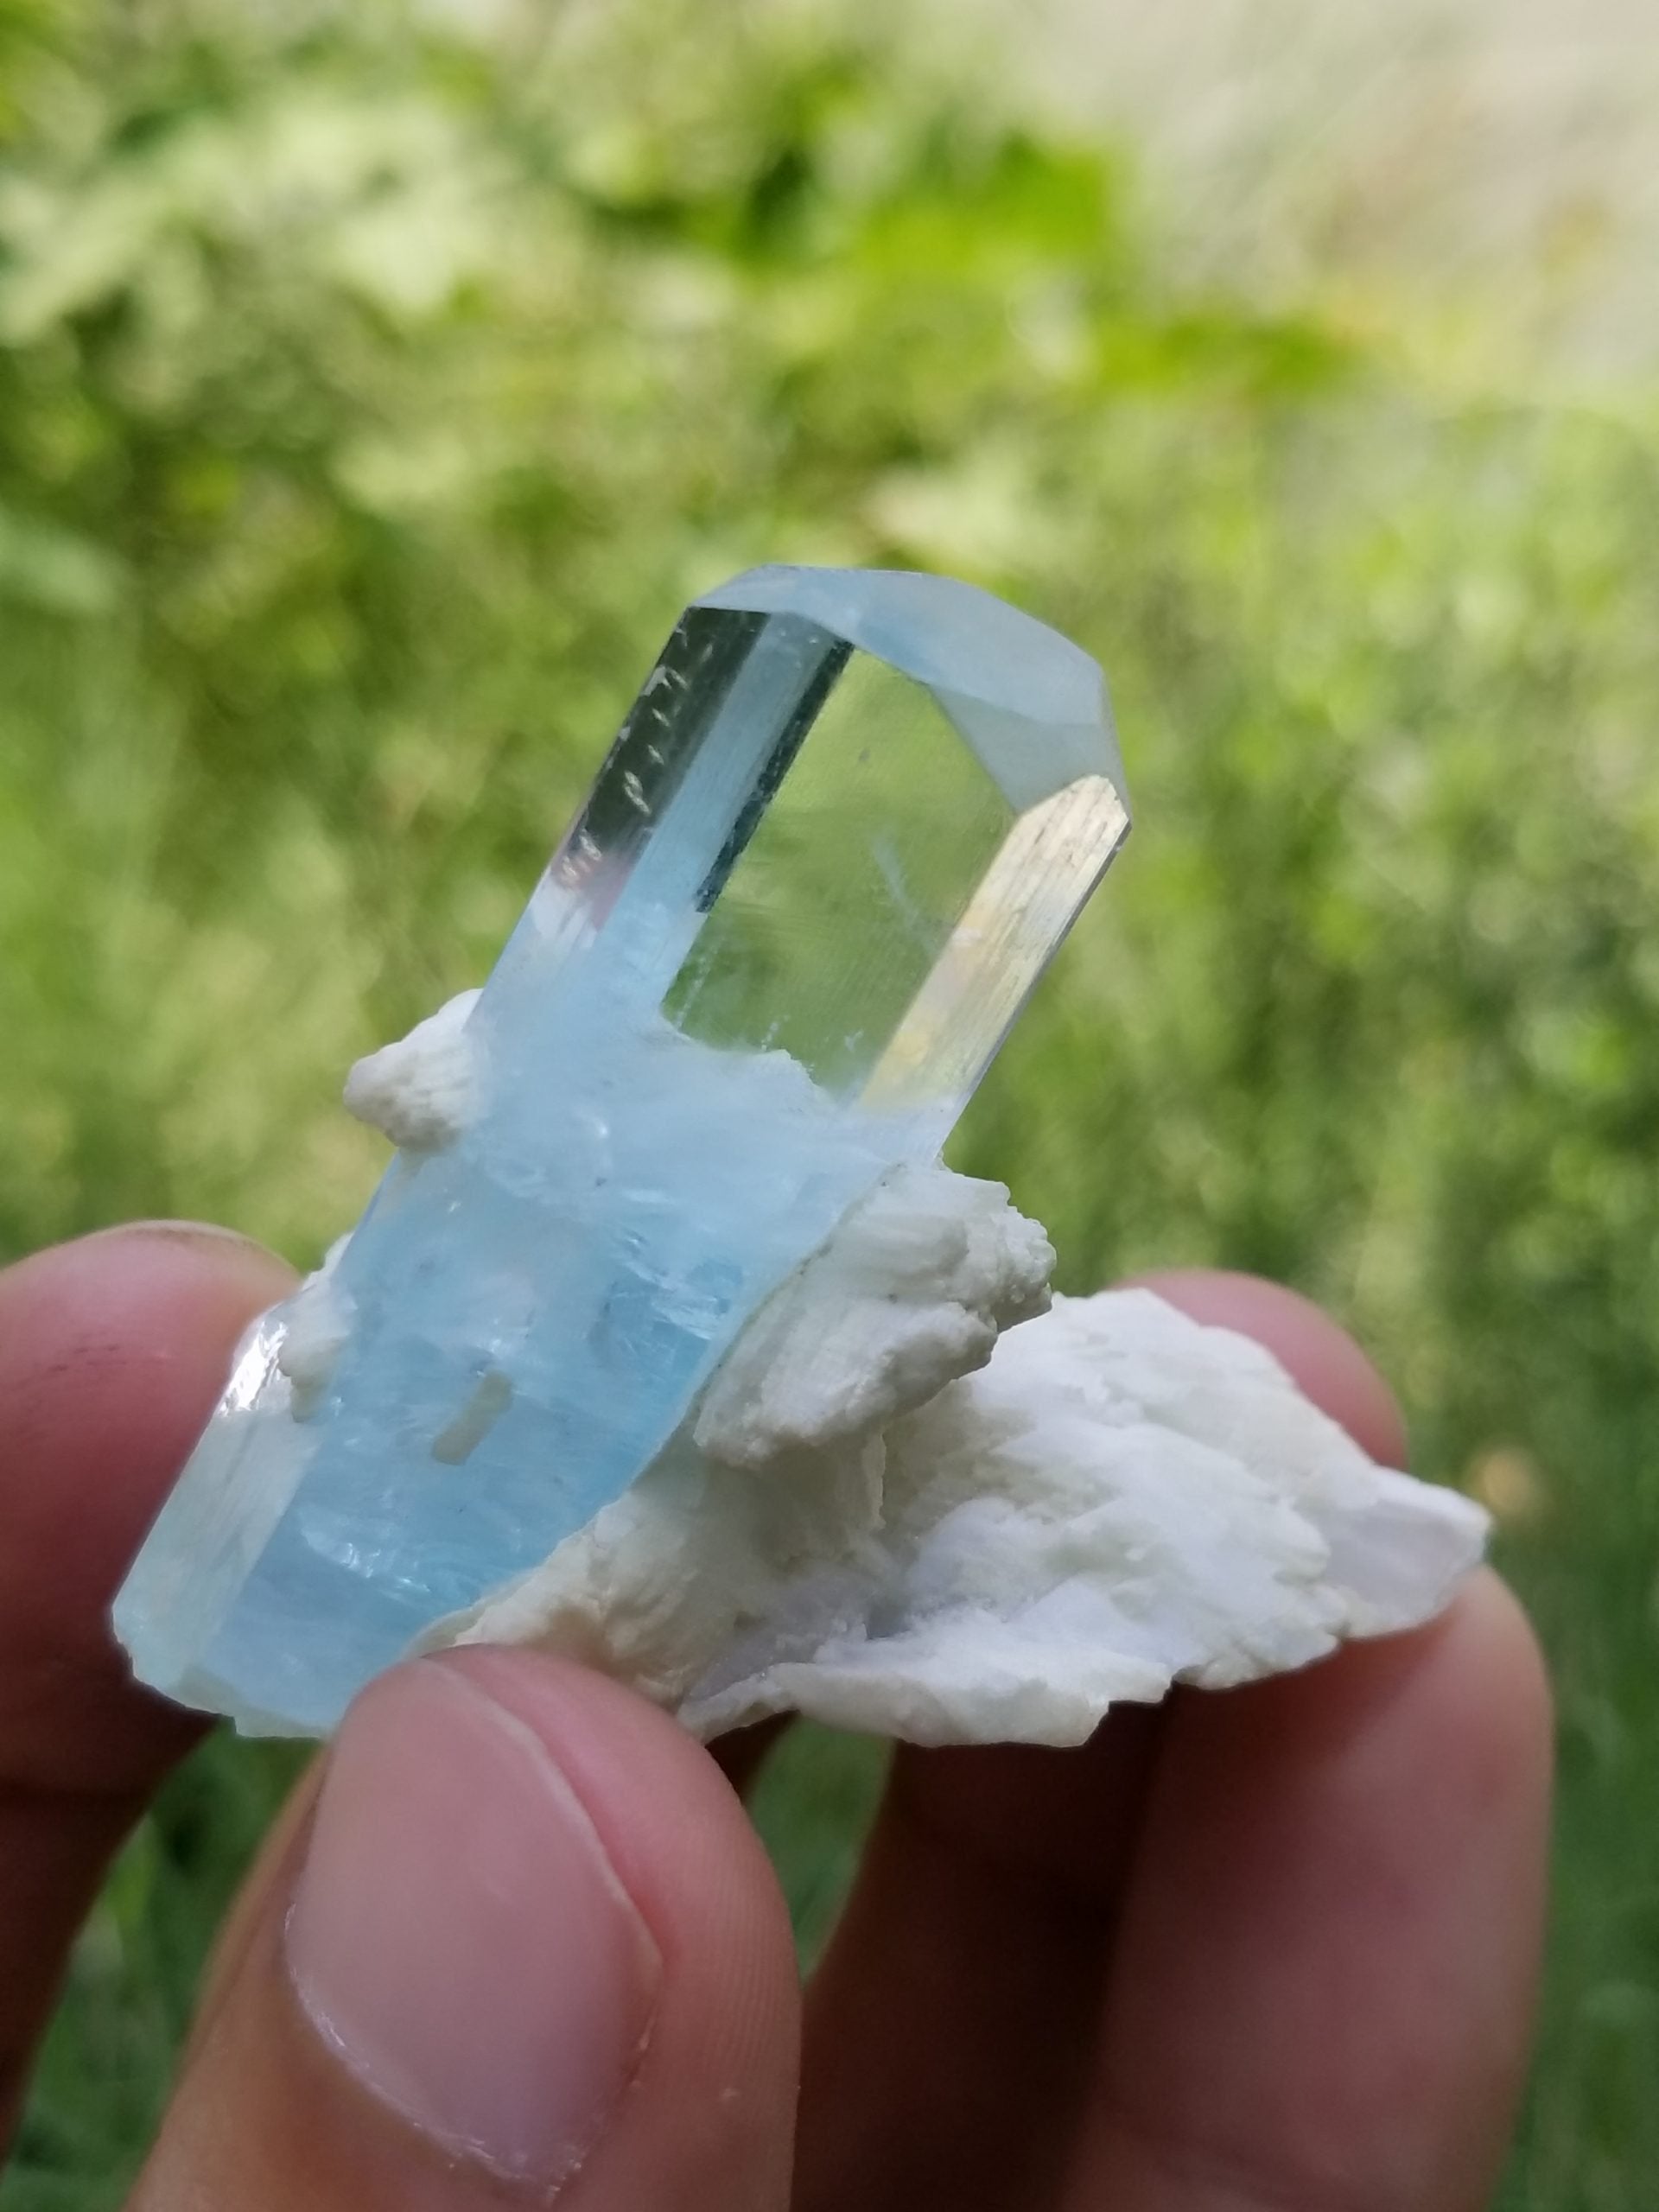 Gemmy Aquamarine Crystal on matrix with cleavelandite